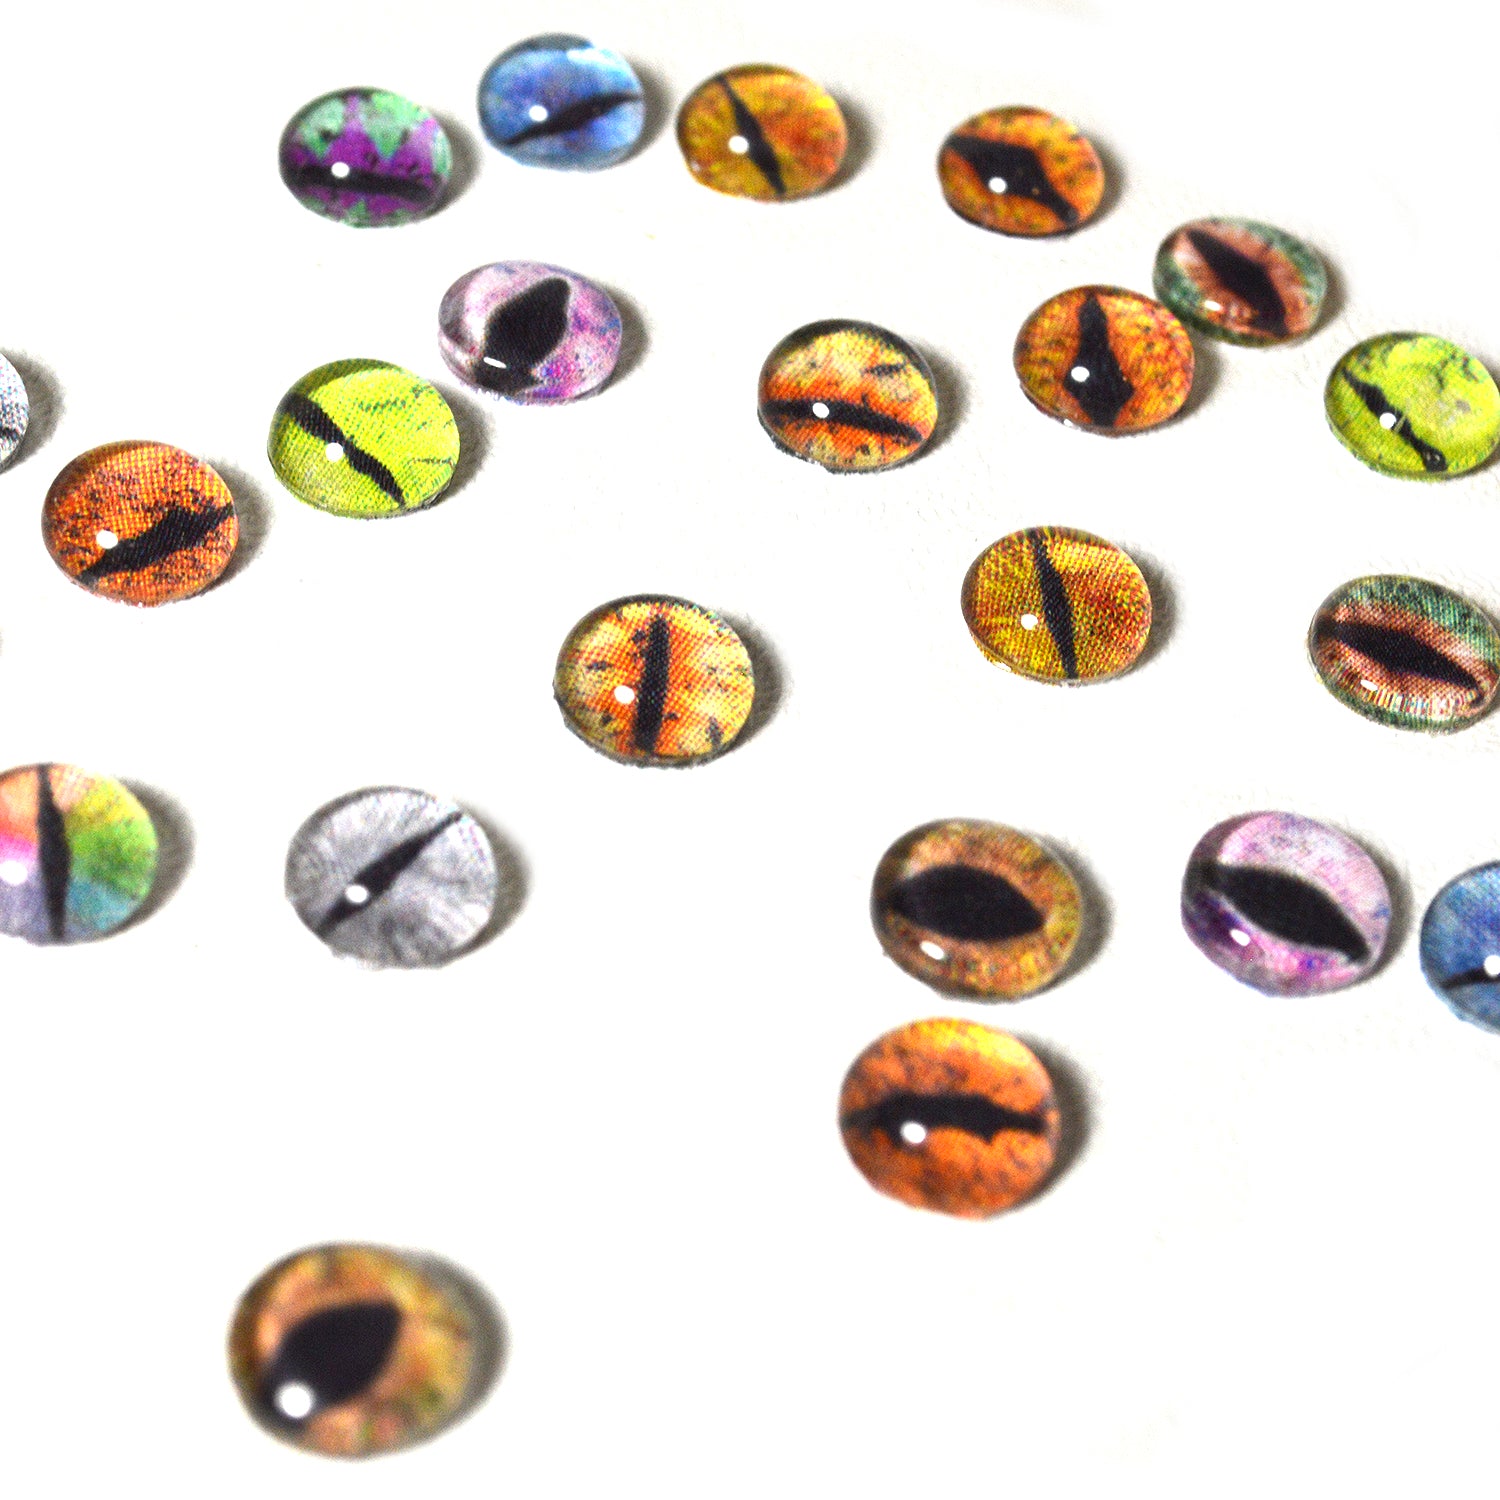 12 Pairs of 8mm Dragon Glass Eyes – Handmade Glass Eyes